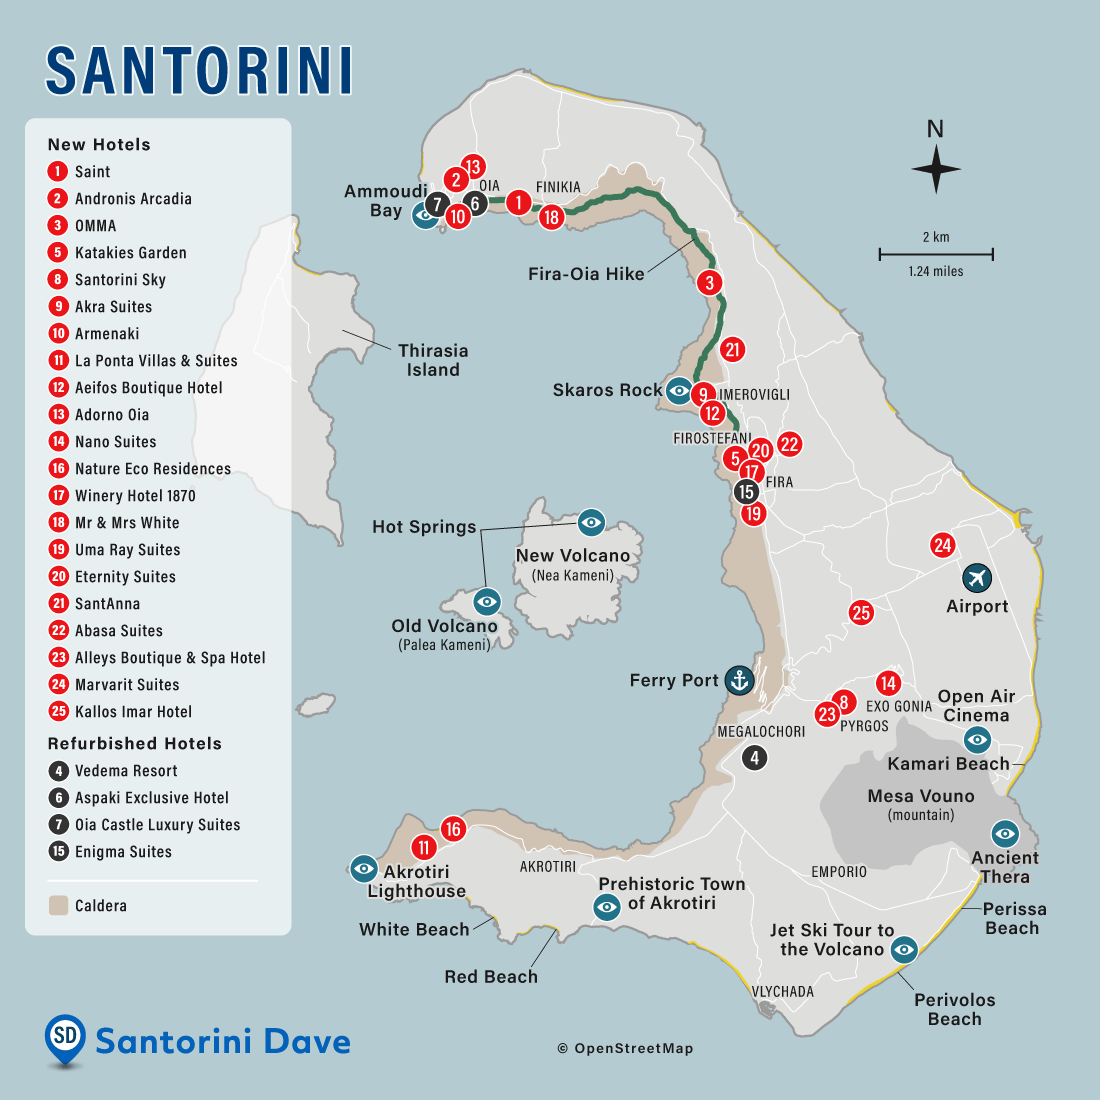 Santorini Beach Map